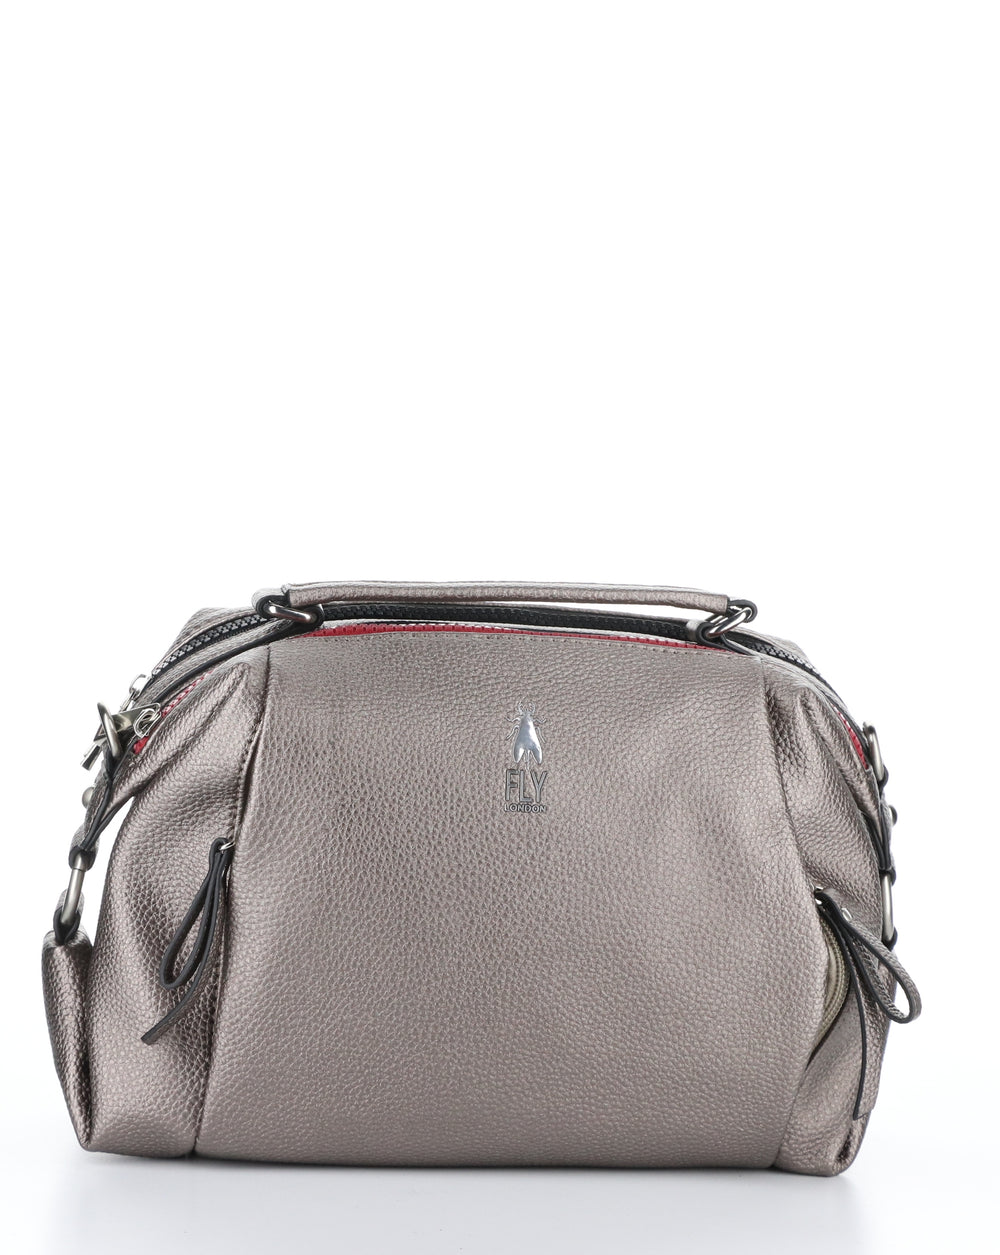 CYRA728FLY 001 DARK SILVER Handbag Bags